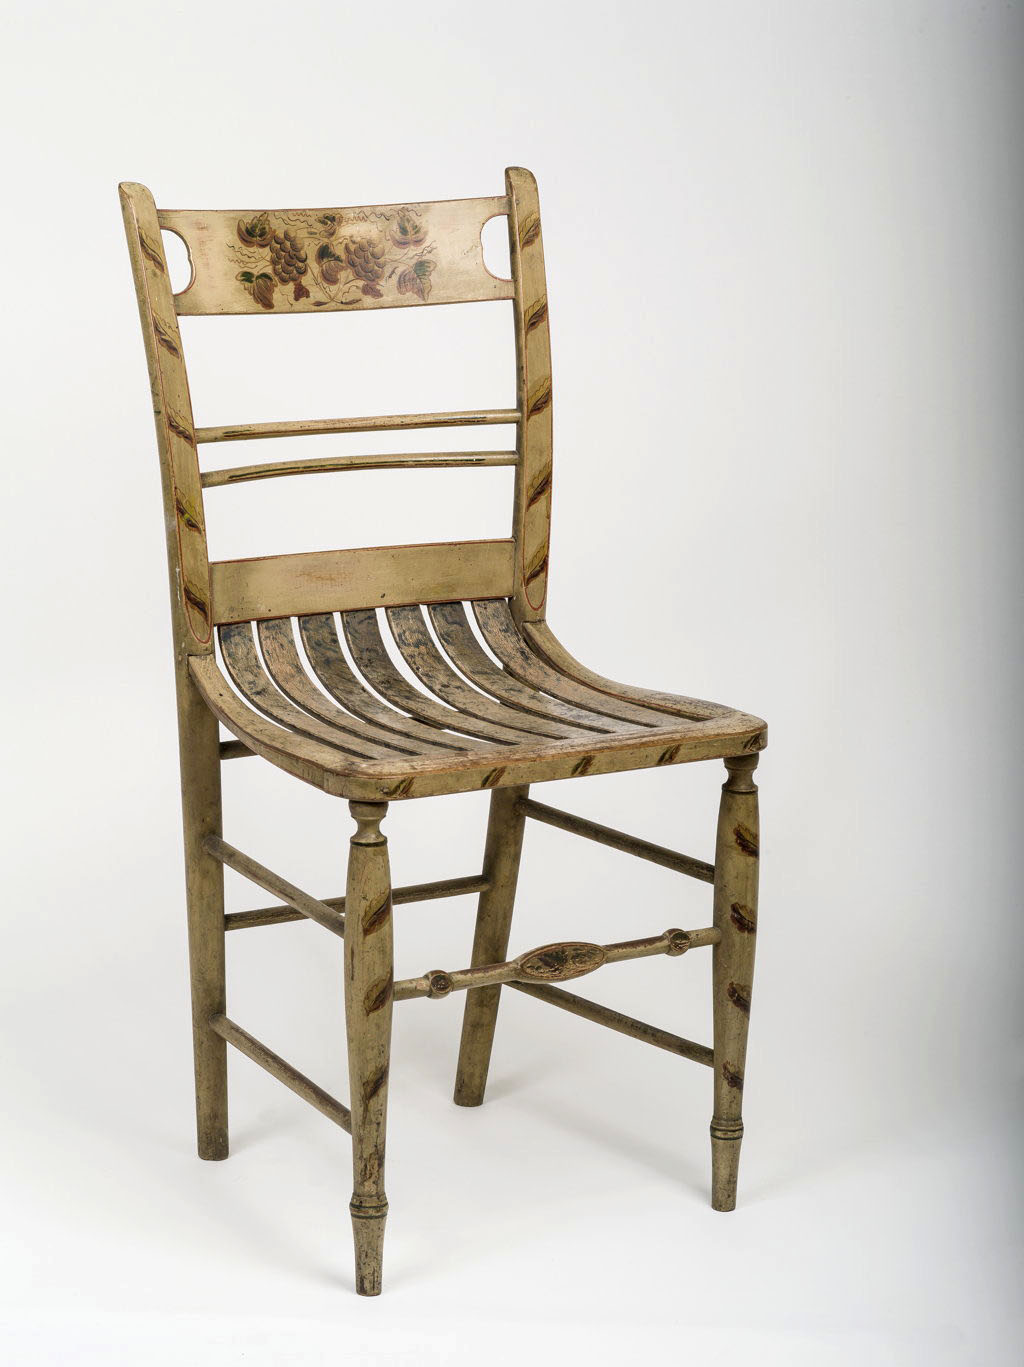 A rare bentwood chair